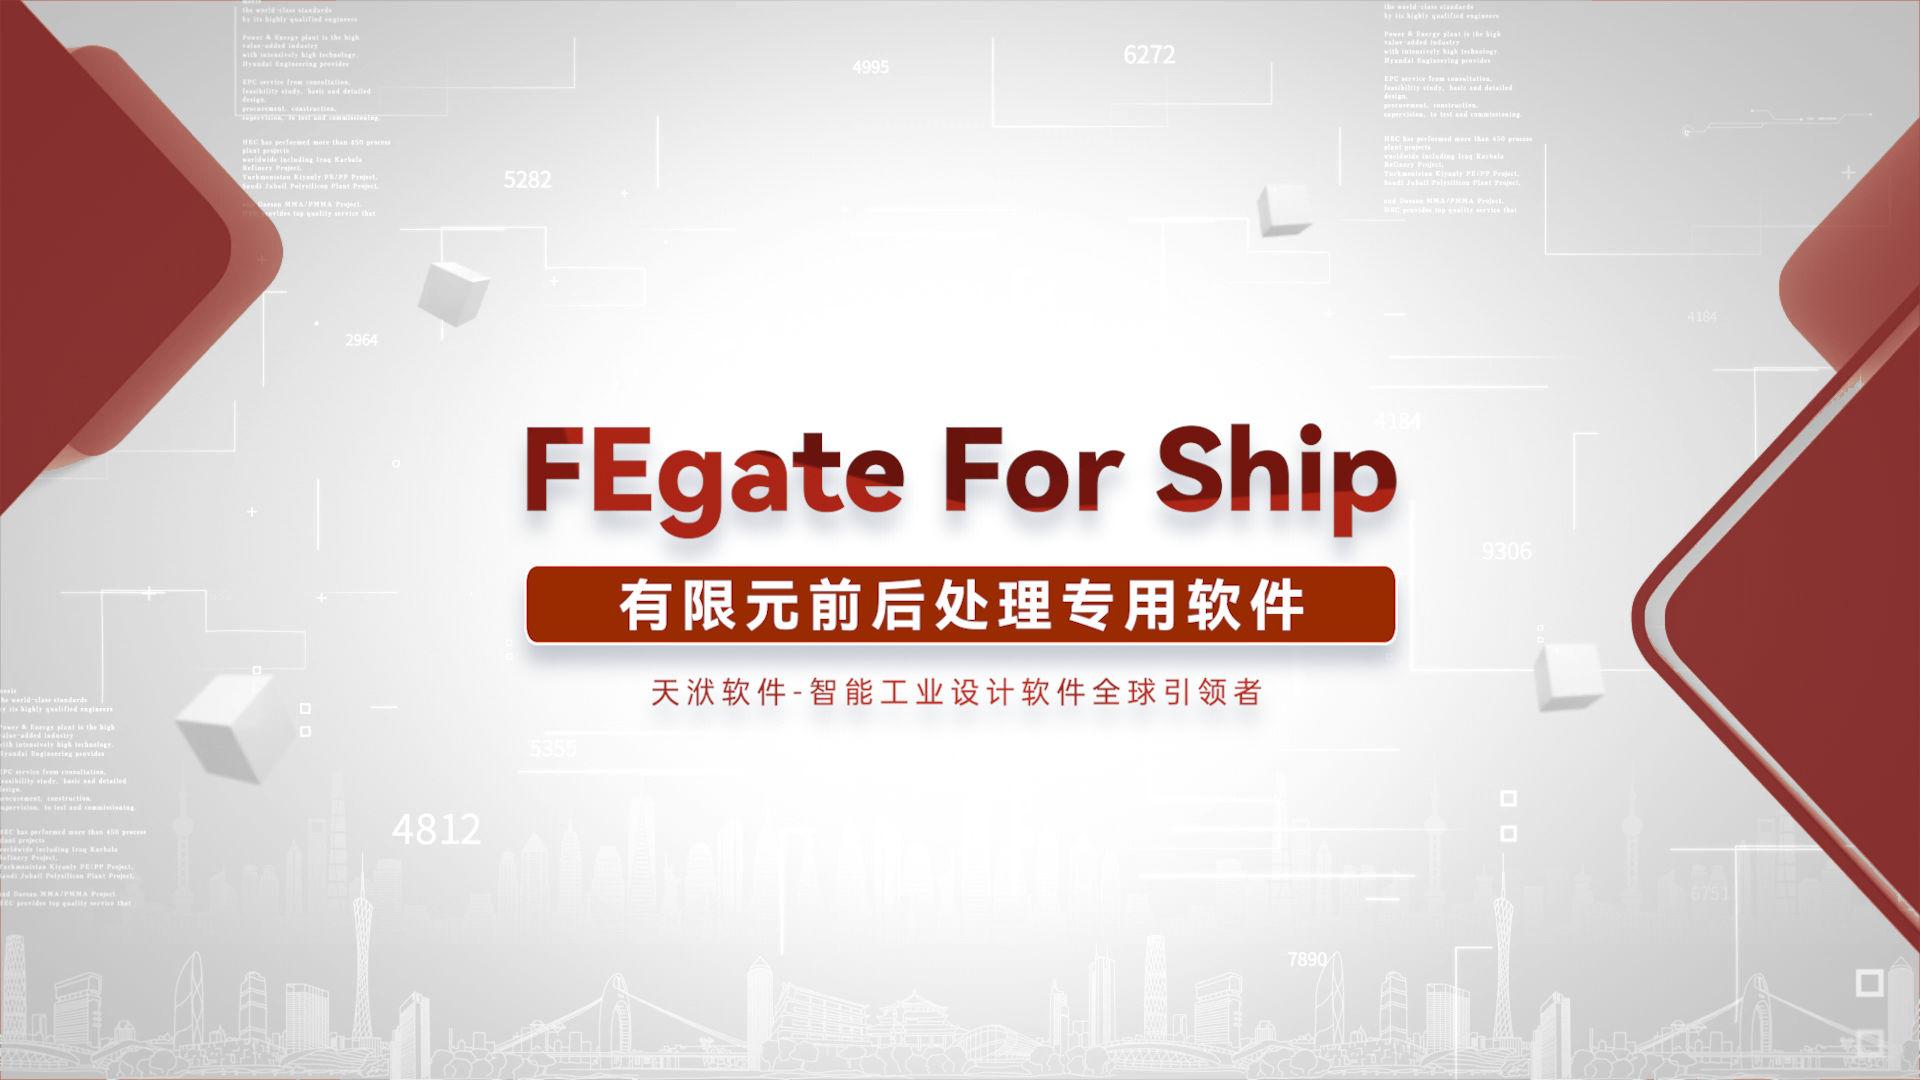 FEgate for ship